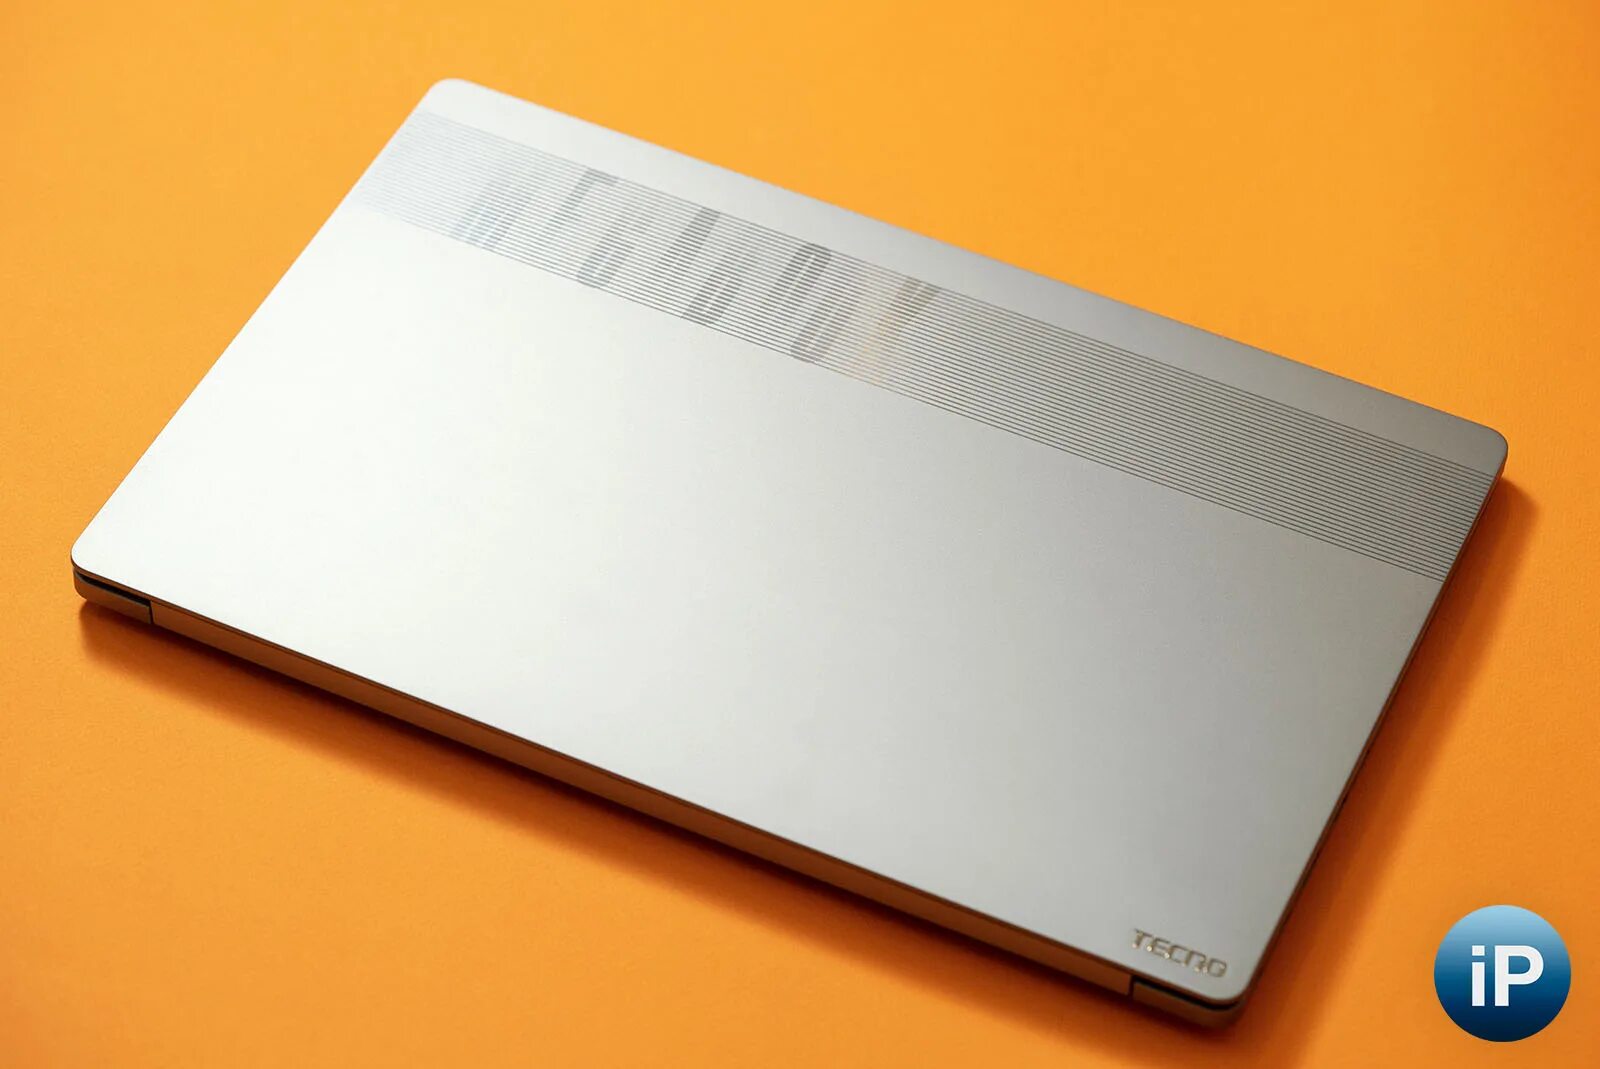 Ноутбук MEGABOOK. Techno ноутбук MEGABOOK цвета. Матрица ноутбука Techno MEGABOOK t1. Ноутбук Tecno MEGABOOK t1 синий. Tecno megabook t1 серый